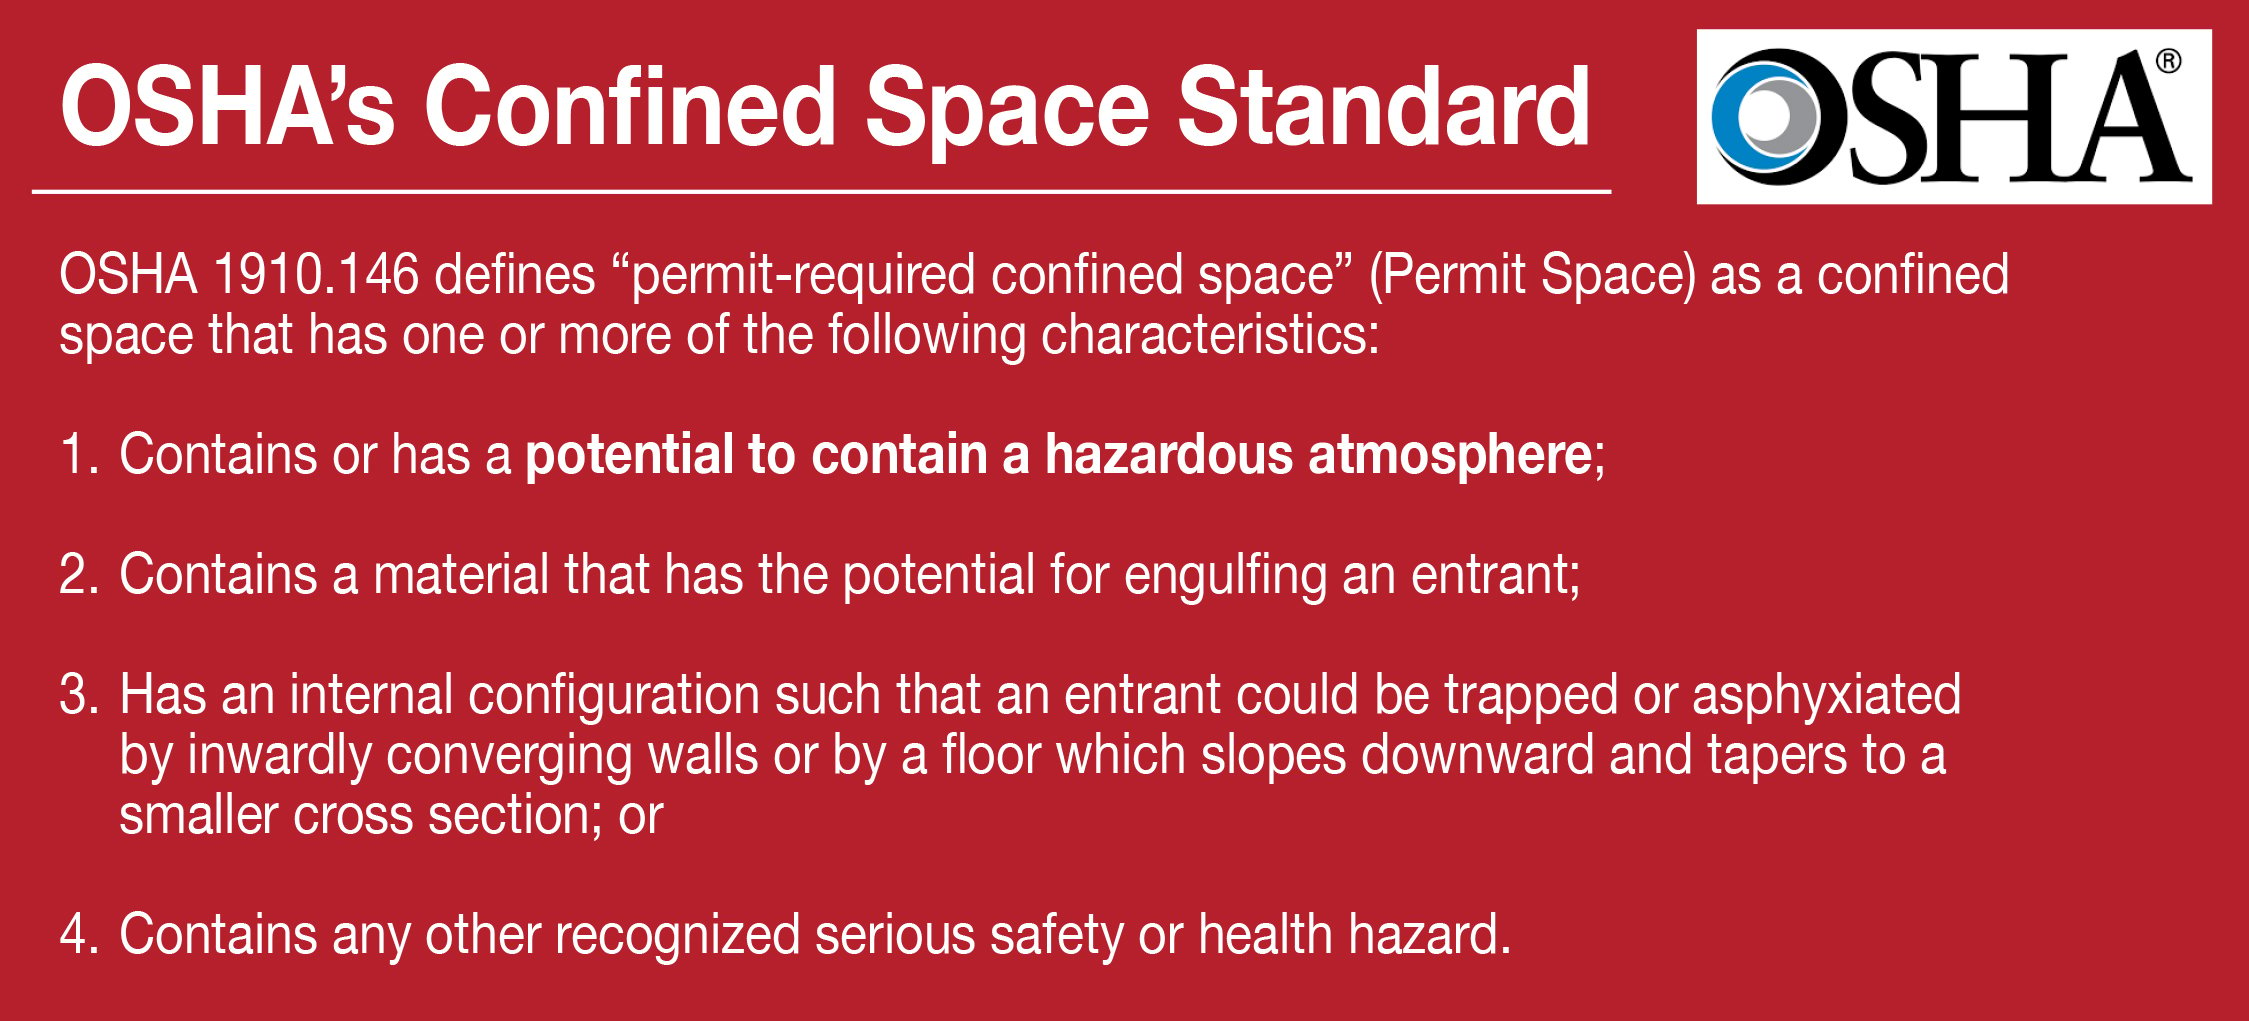 OSHA’s Confined Space Standard Box